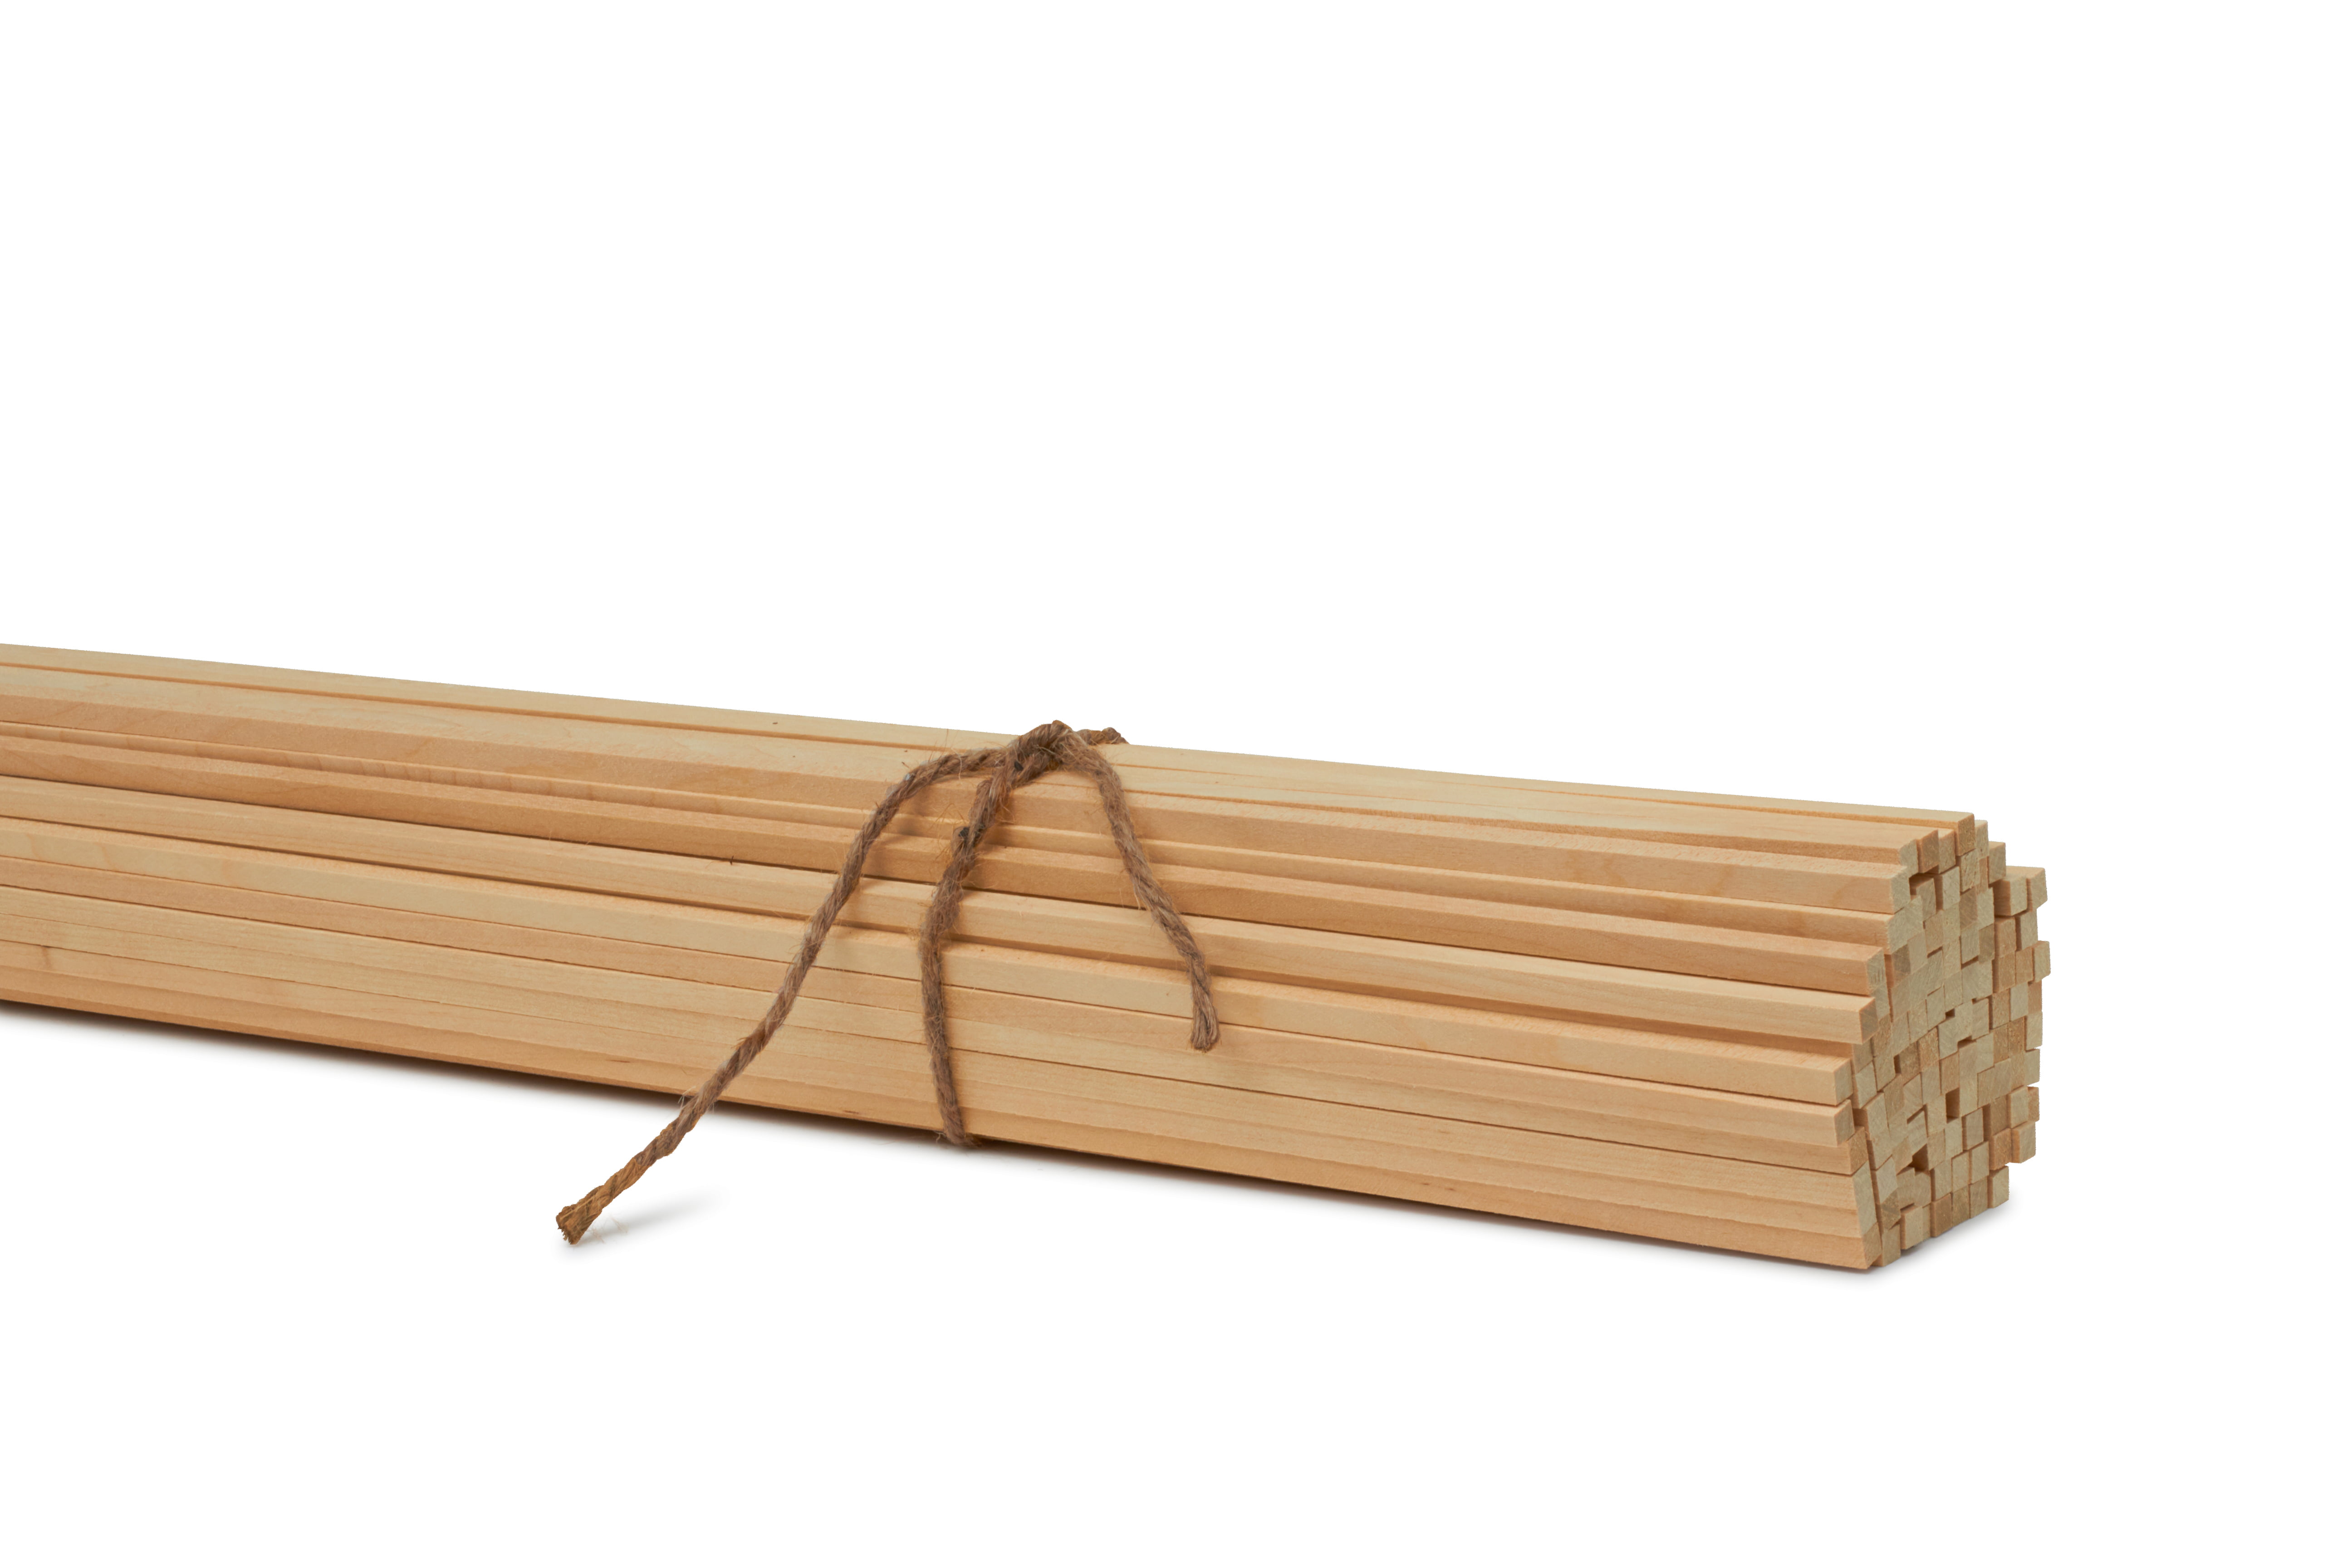 6 x 1/4 Inch Wood Dowel Rods Unfinished Hardwood Sticks for Crafts and DIY,  50 Pcs